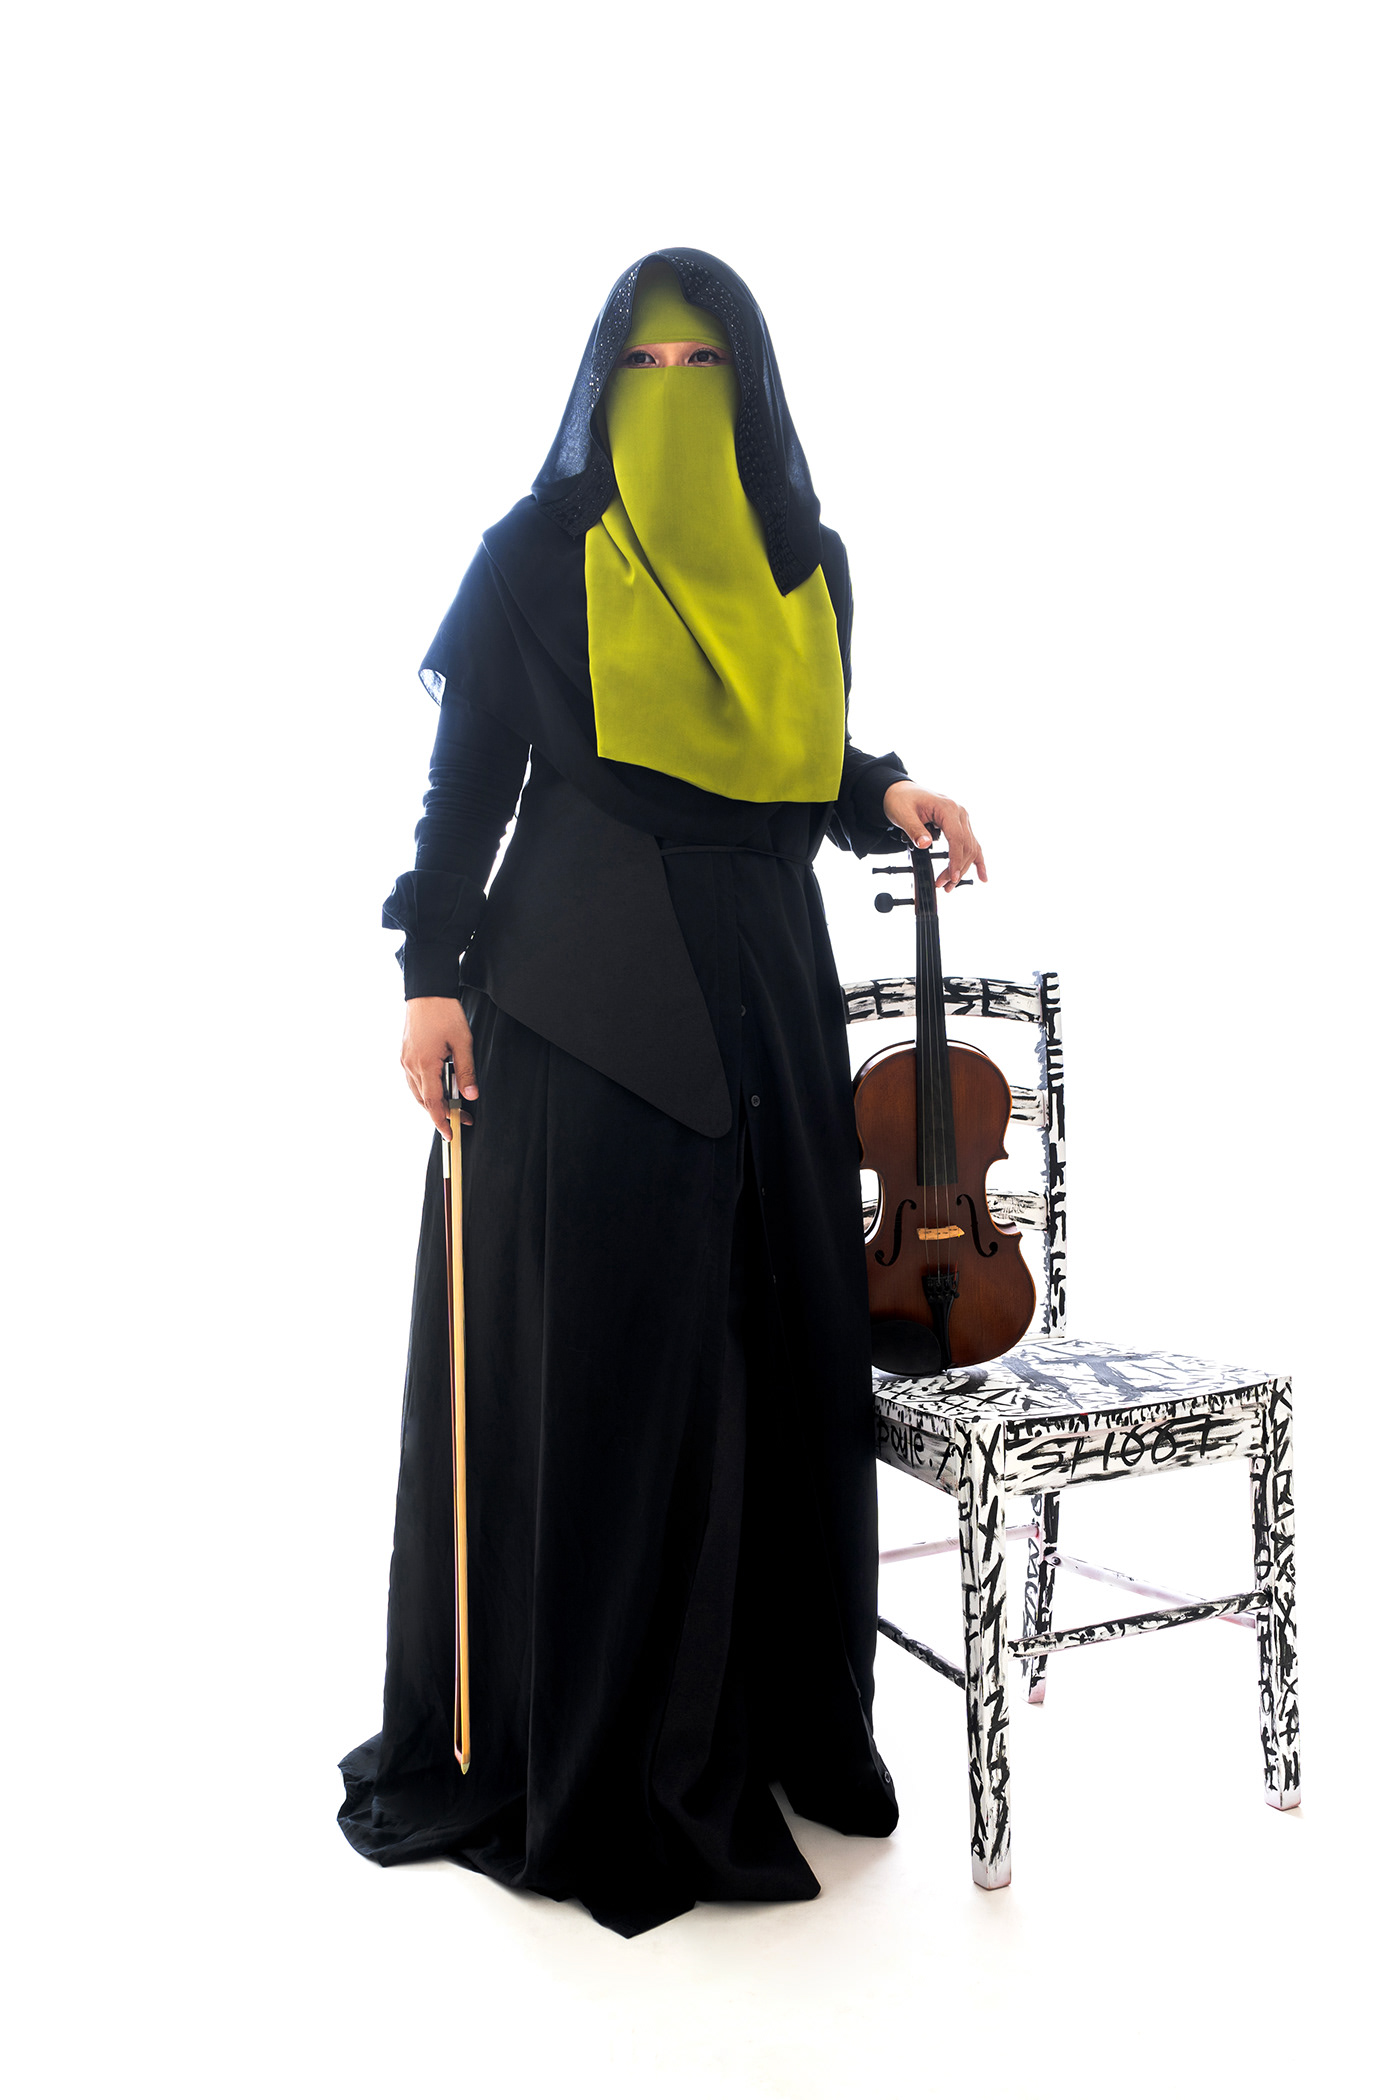 Violin dramatic cinematic Campaign Photoshoot women muslim portrait Photography  music Malaysia artist